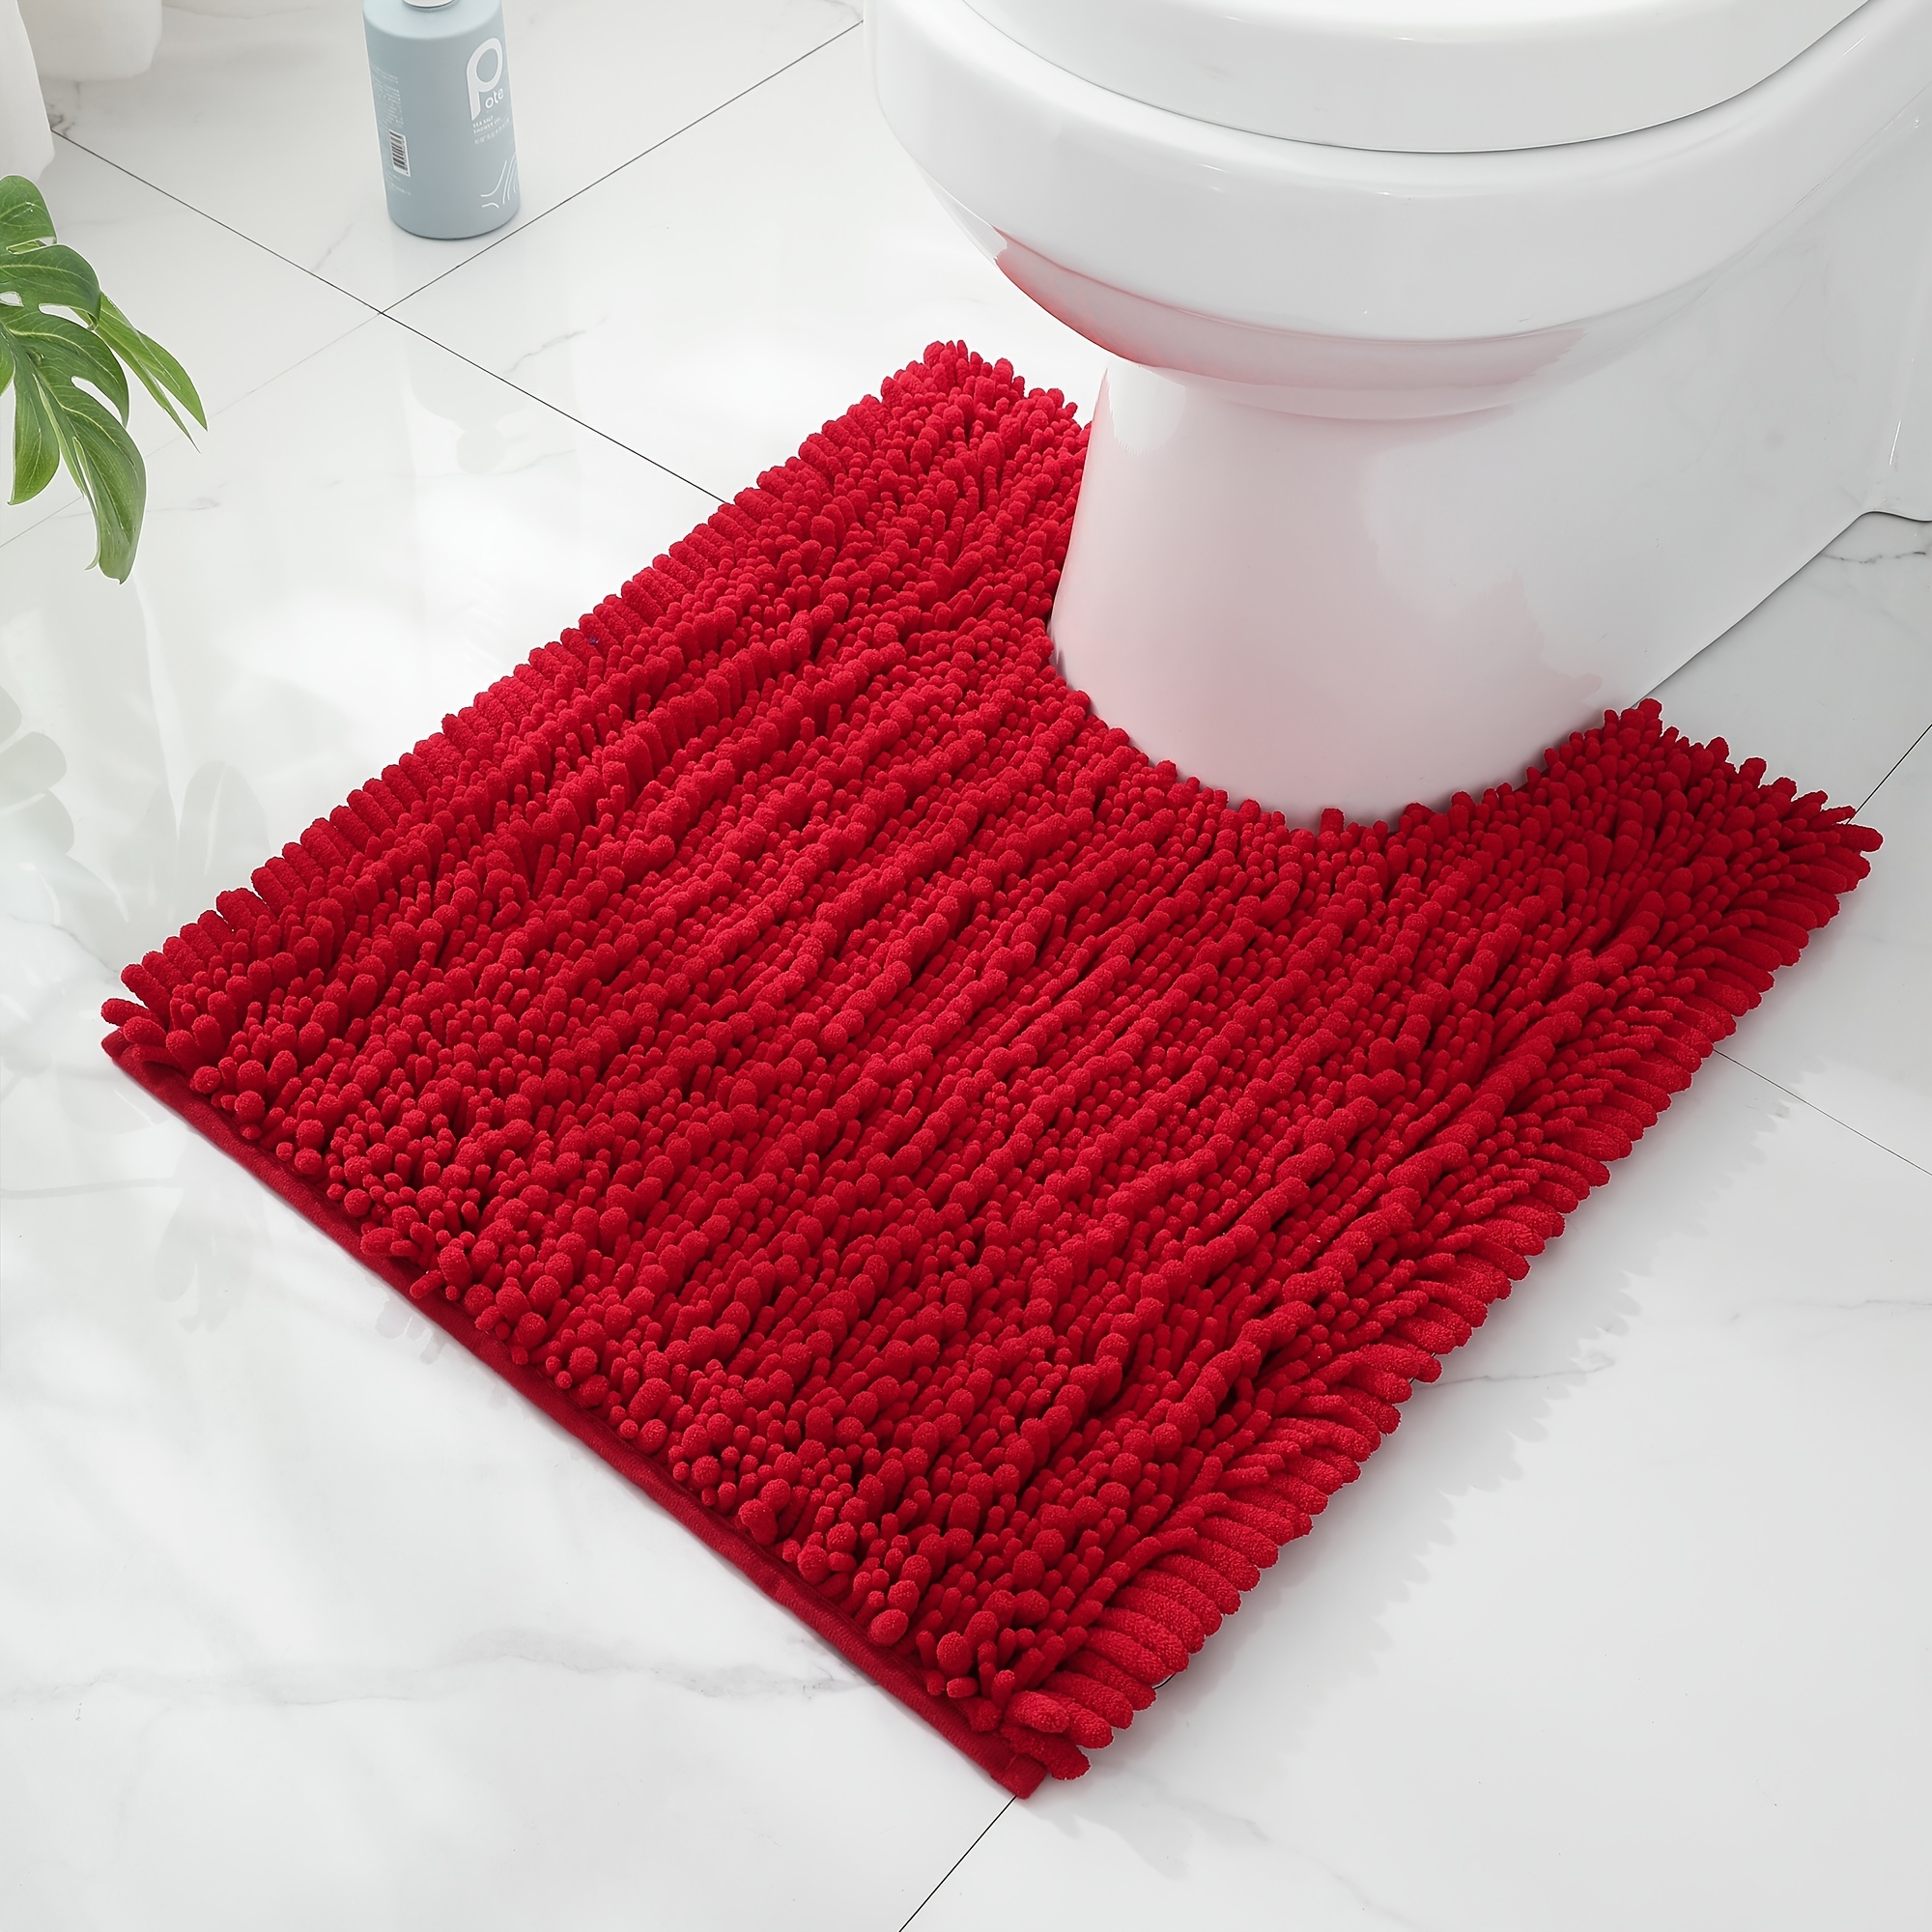 Bathroom Carpet Can Be Curled New Modern Minimalist Style Diatom